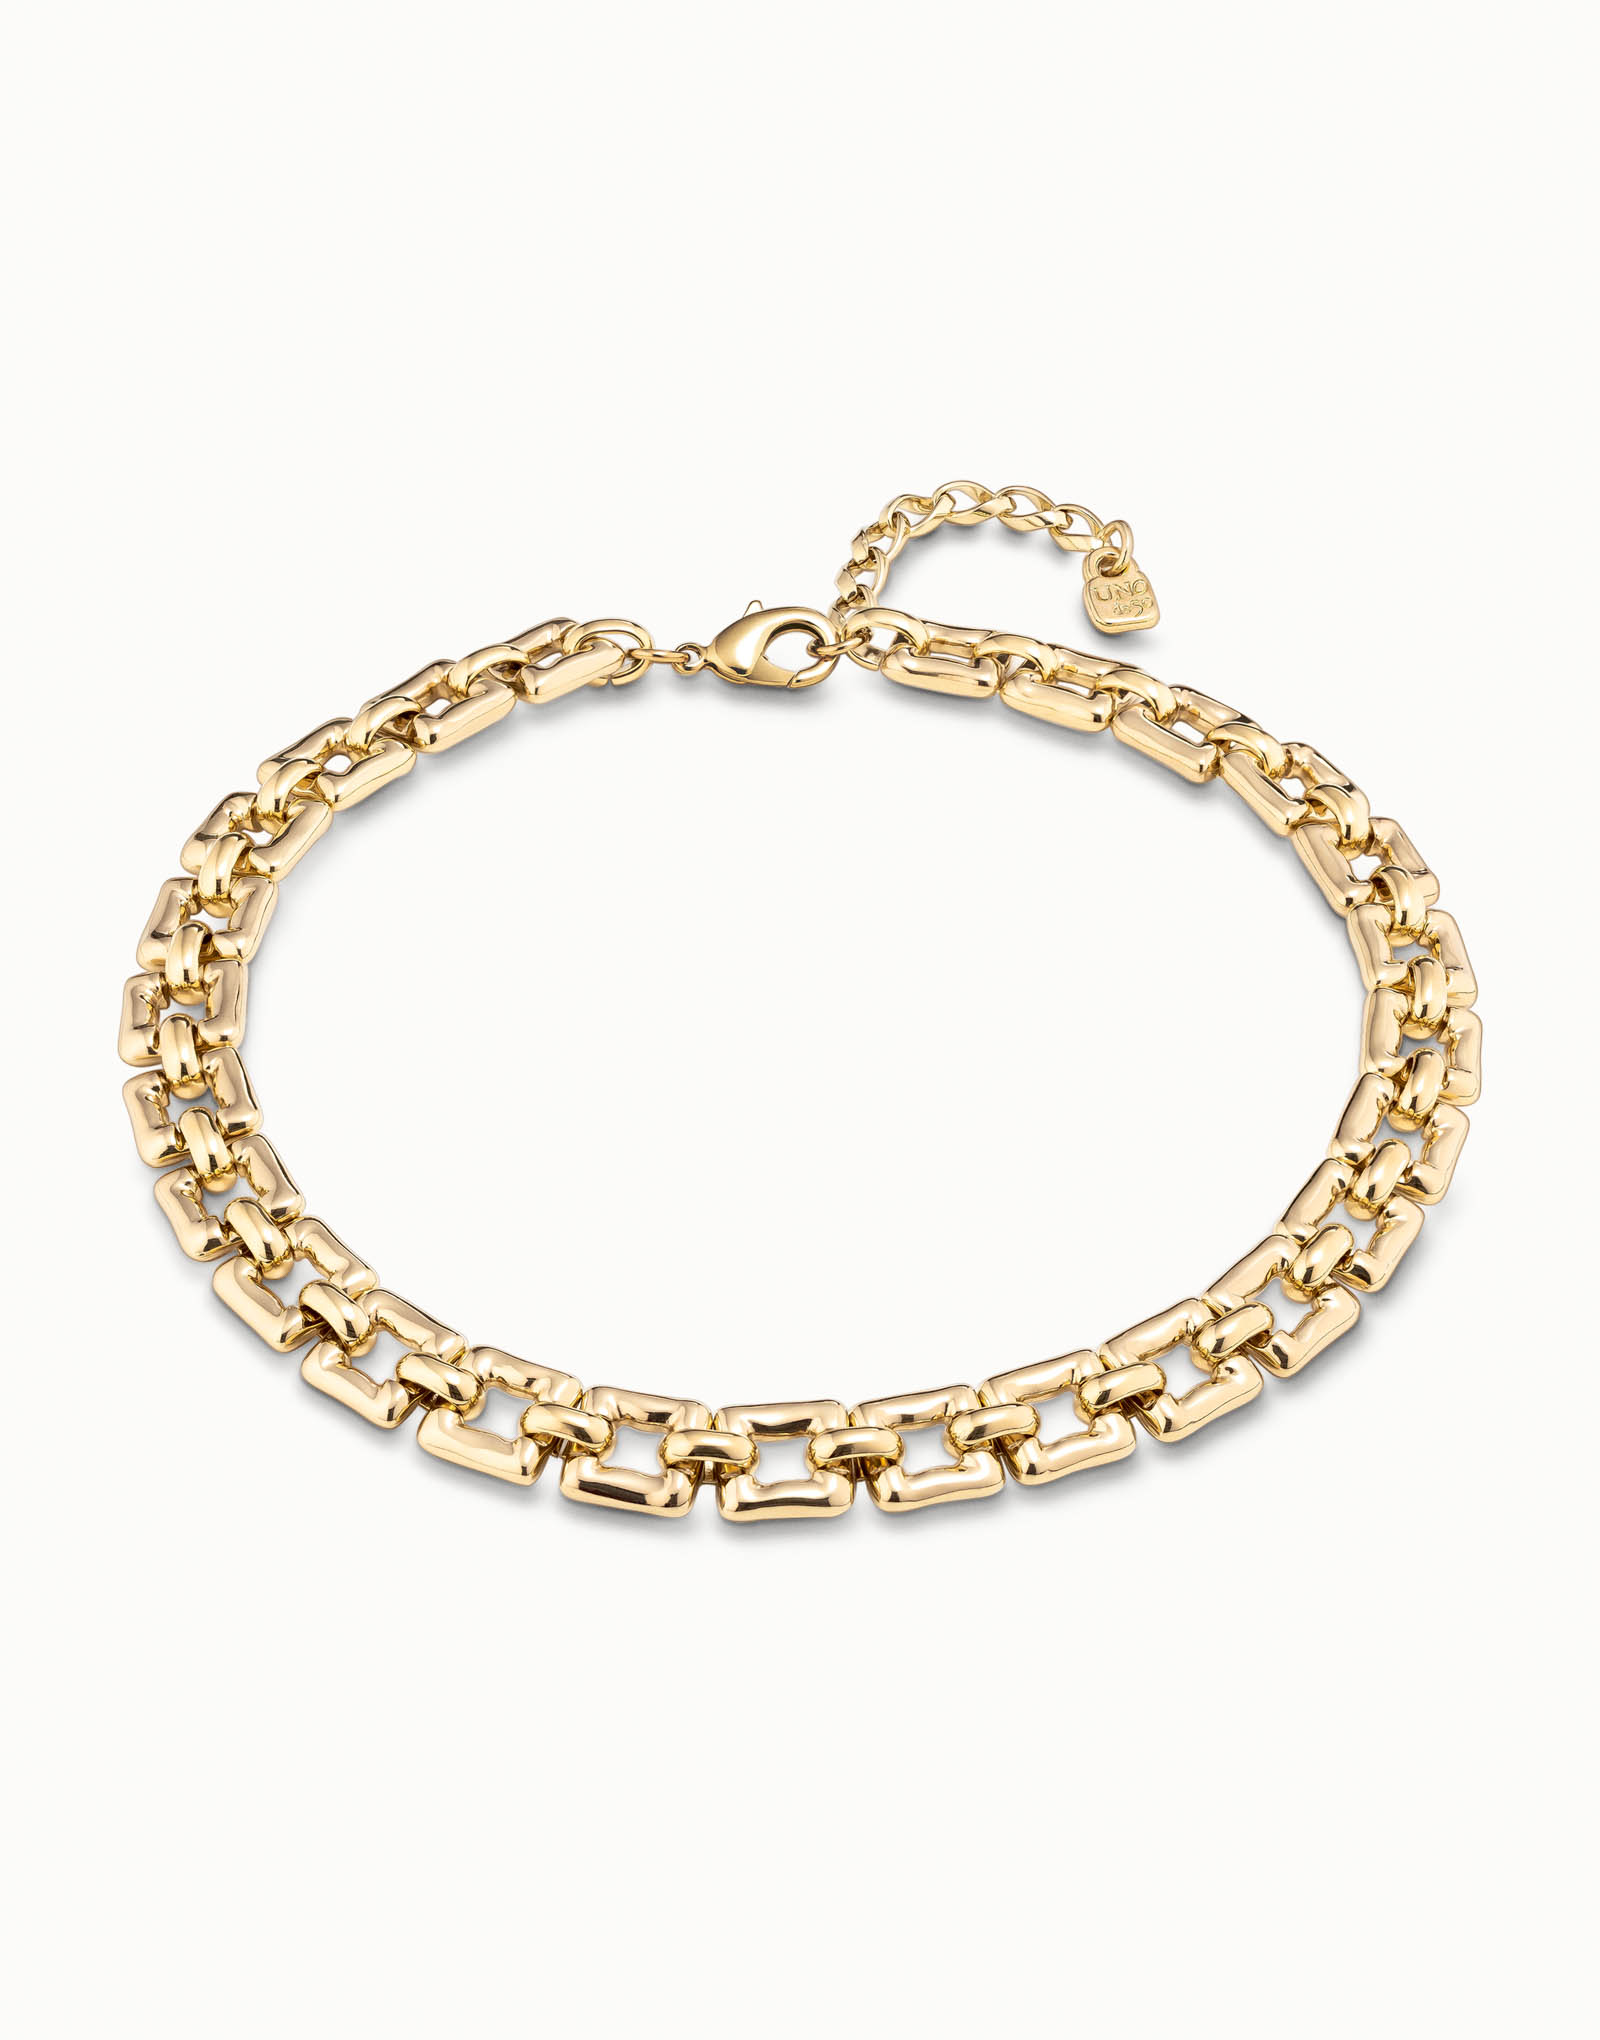 Femme Fatale Gold Necklace